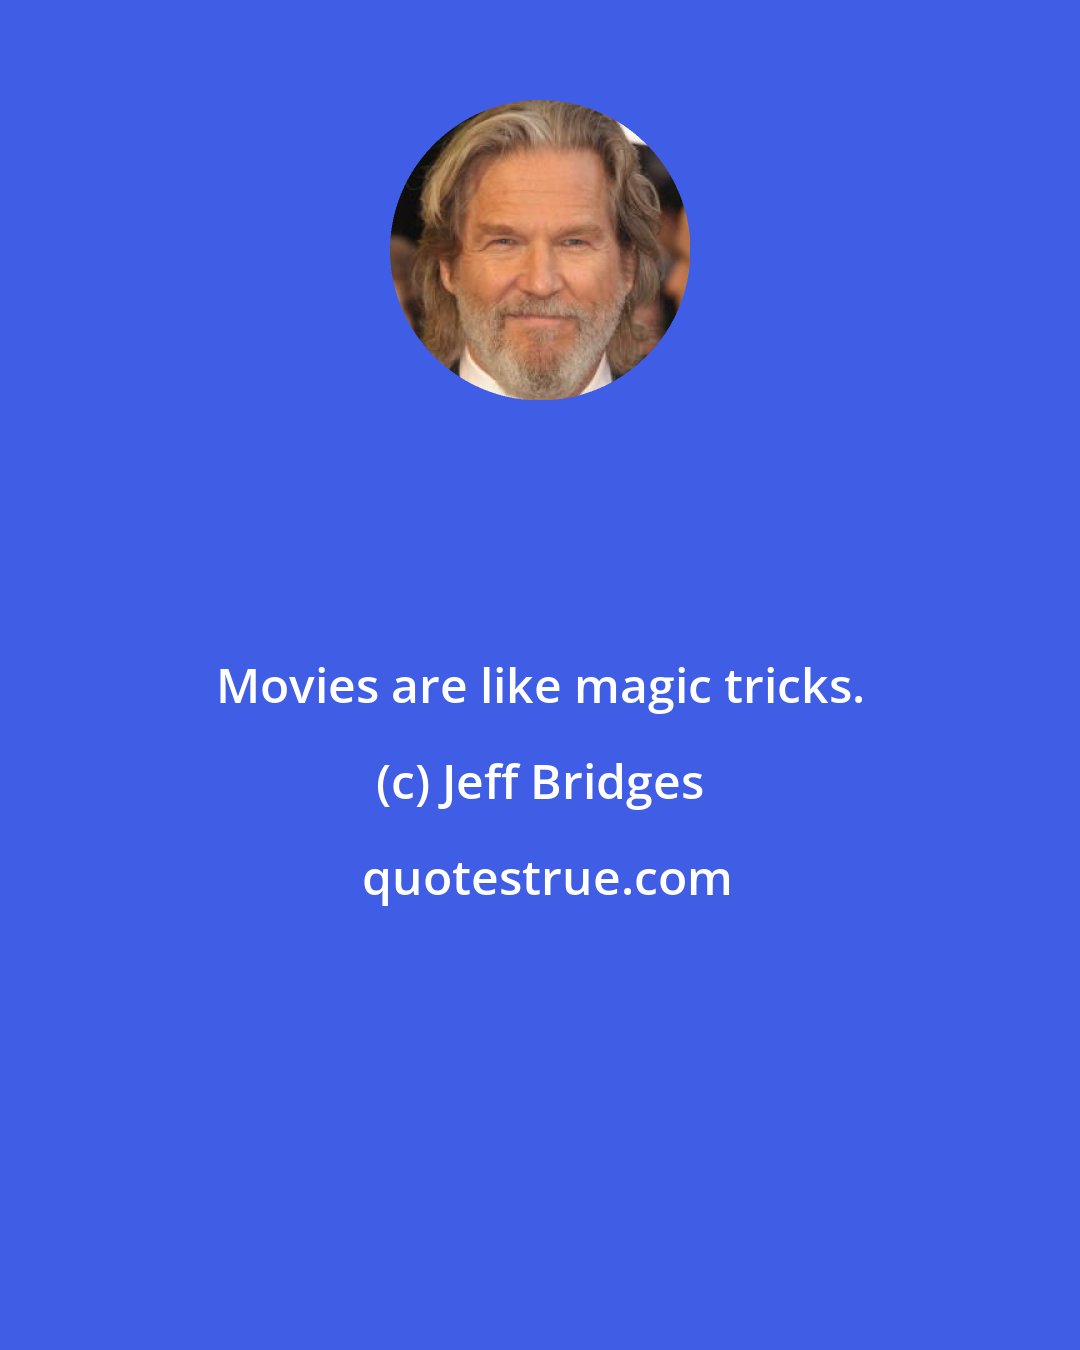 Jeff Bridges: Movies are like magic tricks.